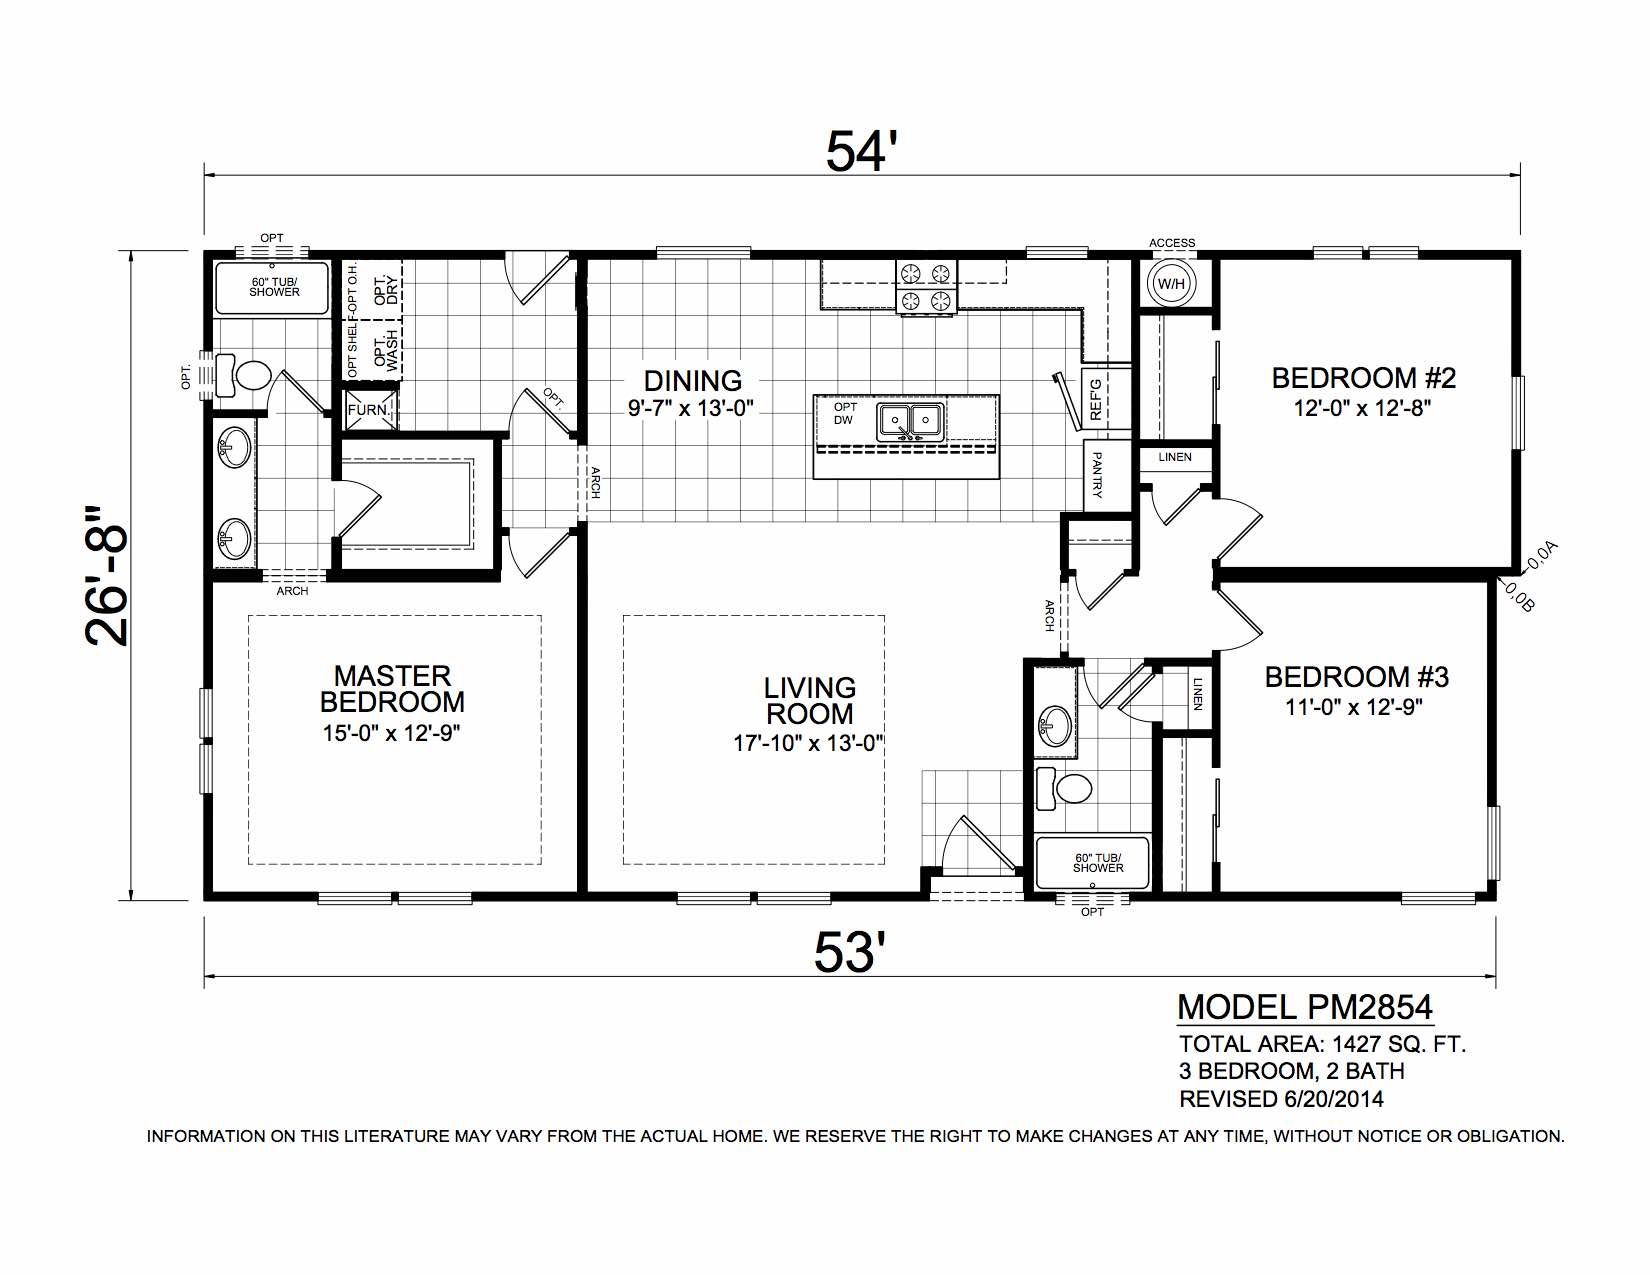 Homes Direct Modular Homes - Model PM2854 - Floorplan